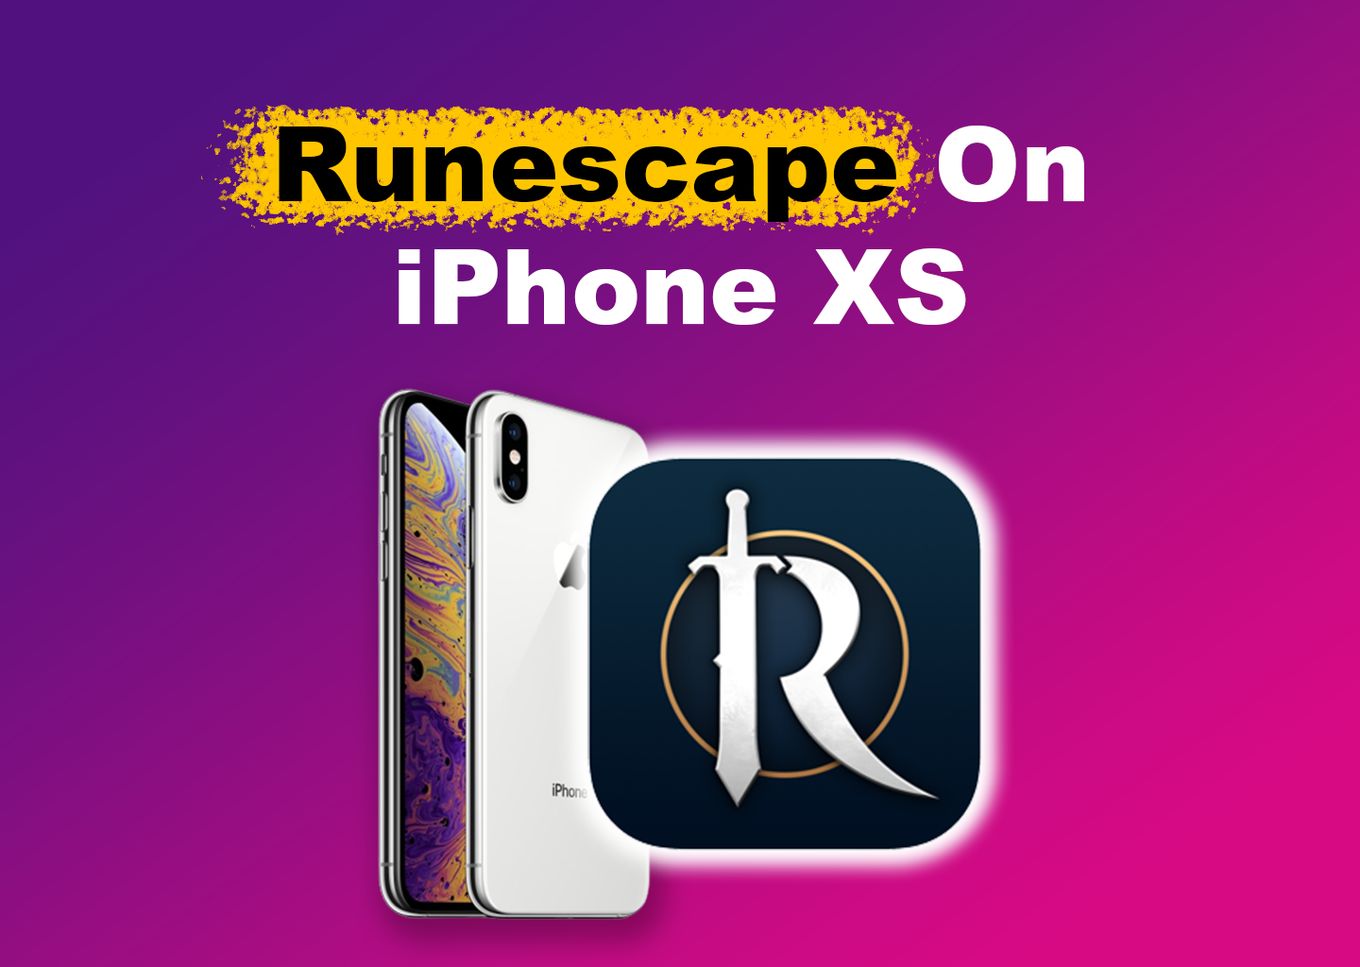 Runescape on iPhone XS